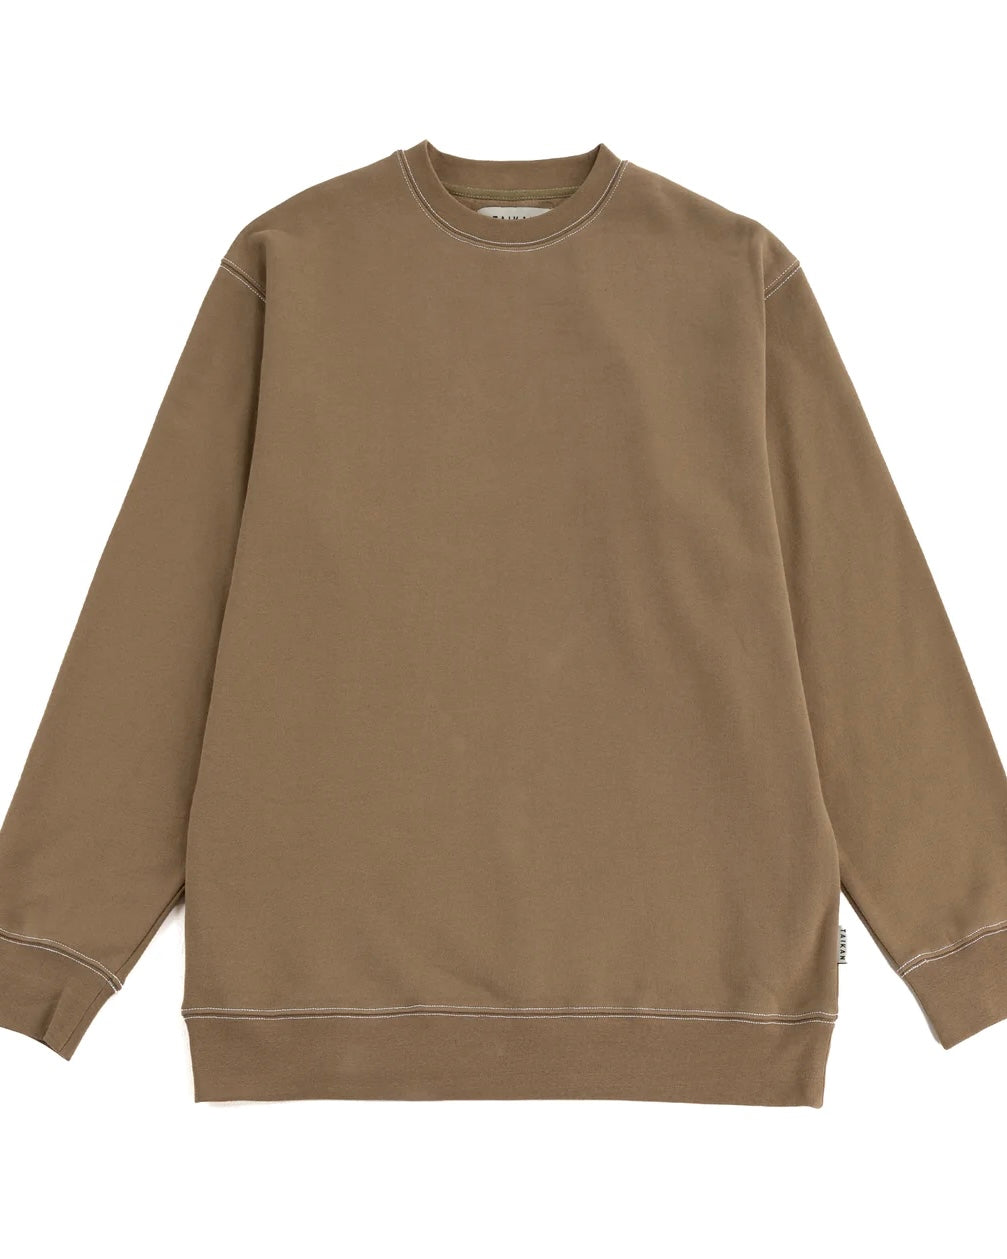 Taikan Custom Crew Sweatshirt in Dune Contrast Stitch